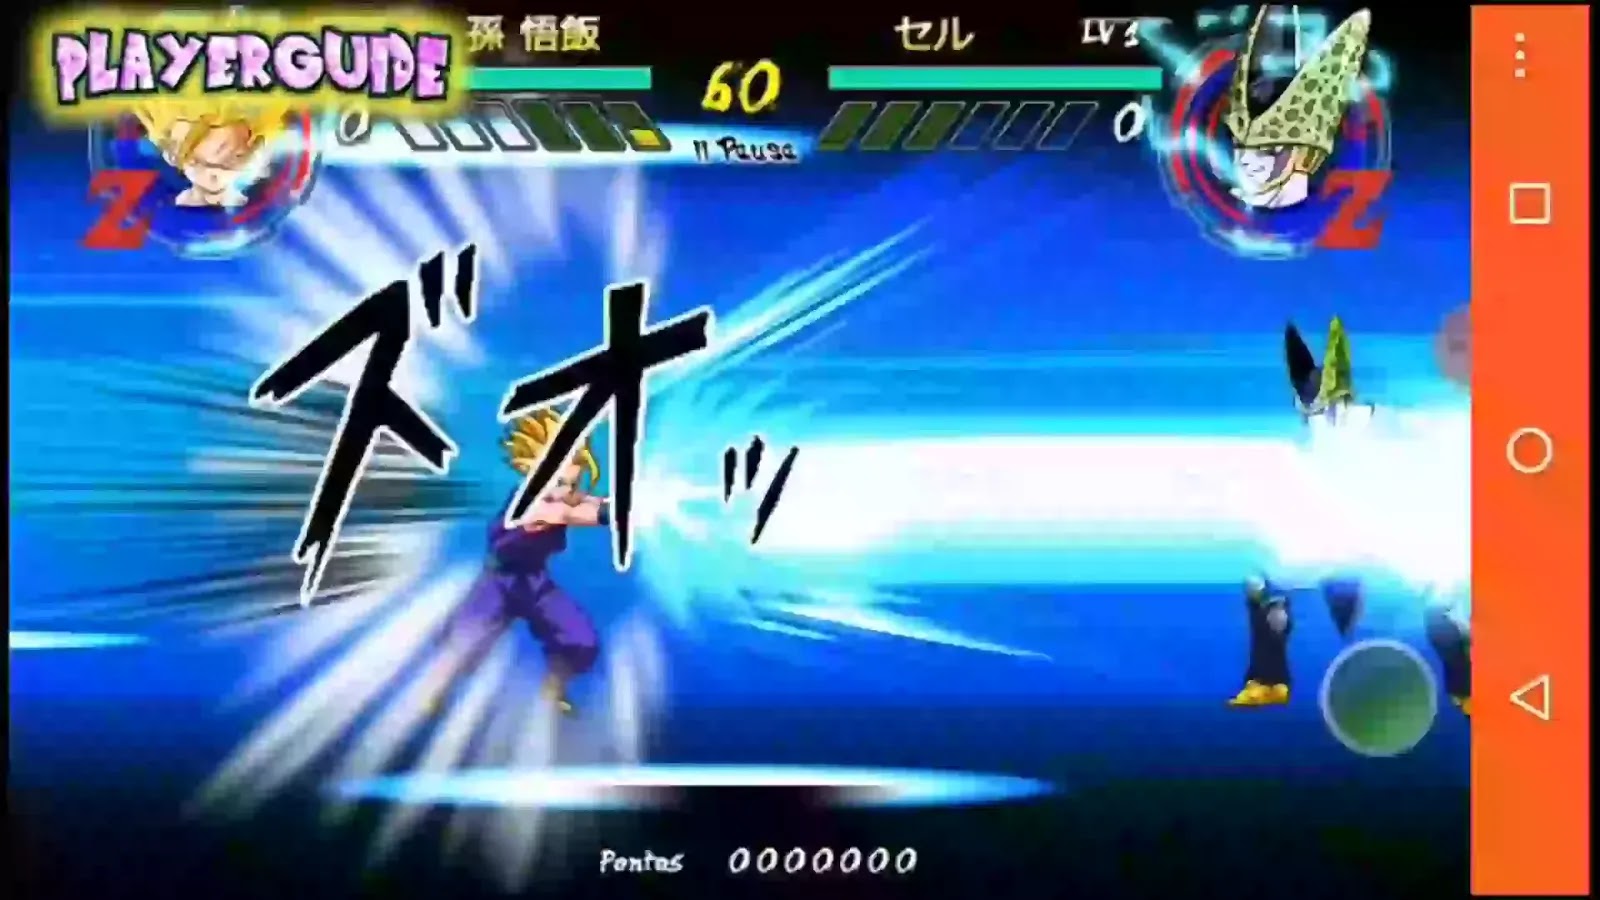 NEW Dragon Ball Z Kakarot MOD Tap Battle Apk For Android - BiliBili